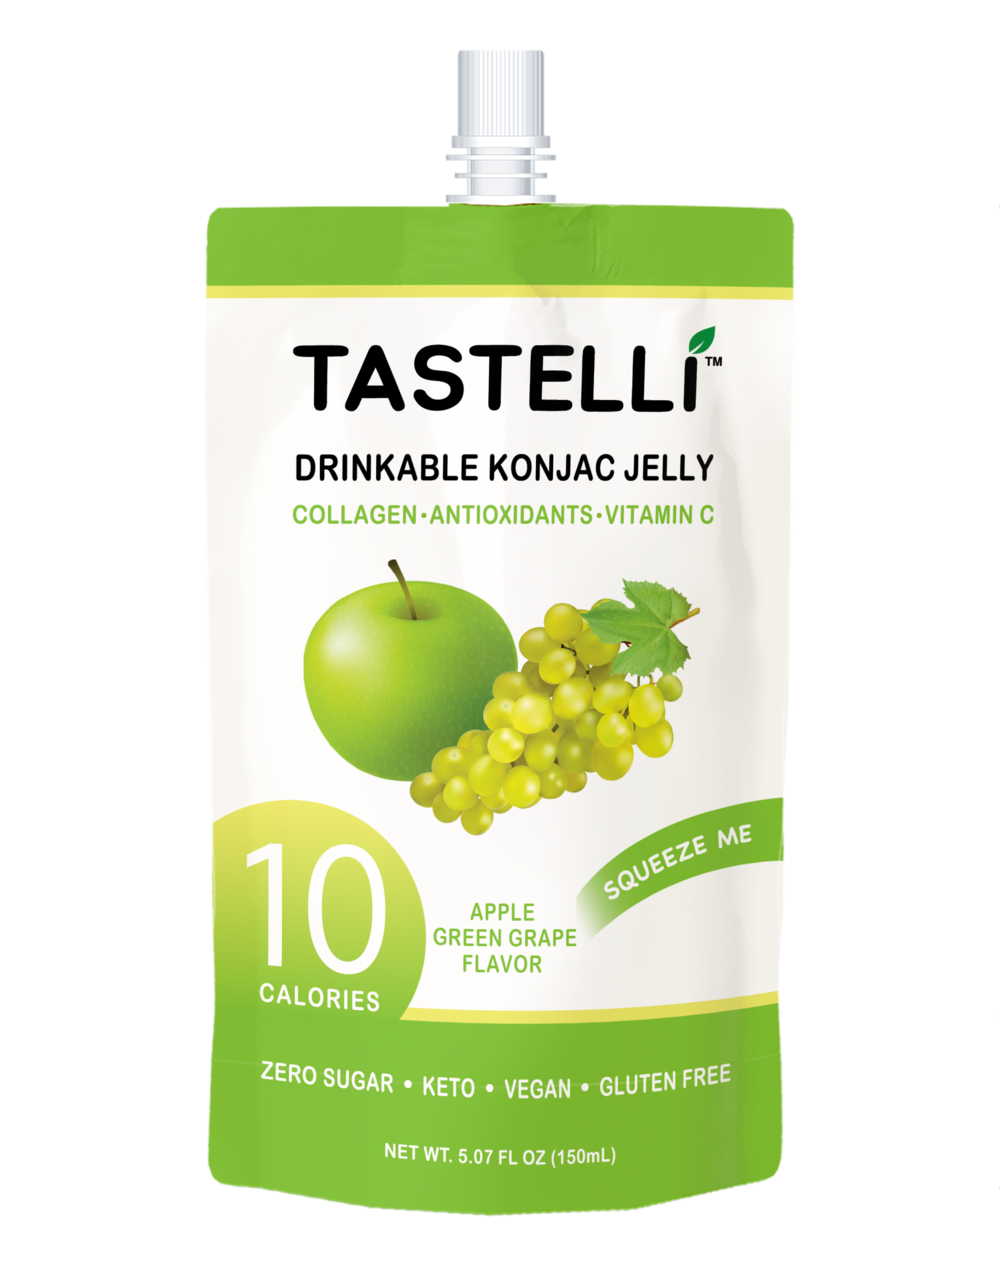 Tastelli Collagen Konjac Jelly Case (150 ml x 10 packs) - Apple Green Grape Flavor - Tastelli Konjac Jelly